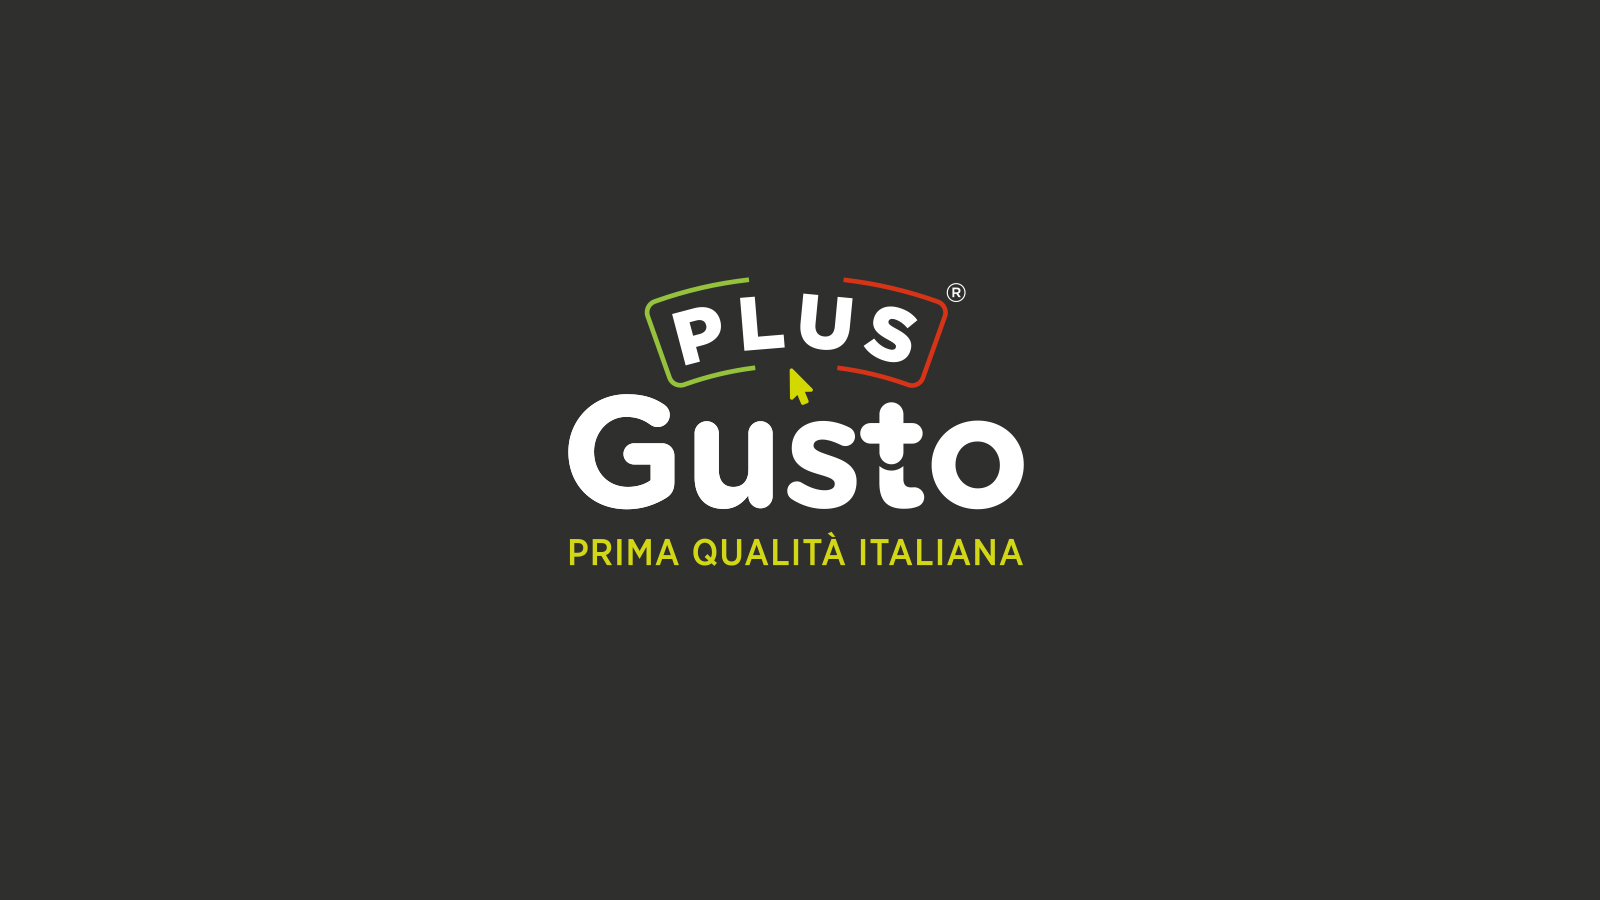 Plus Gusto website